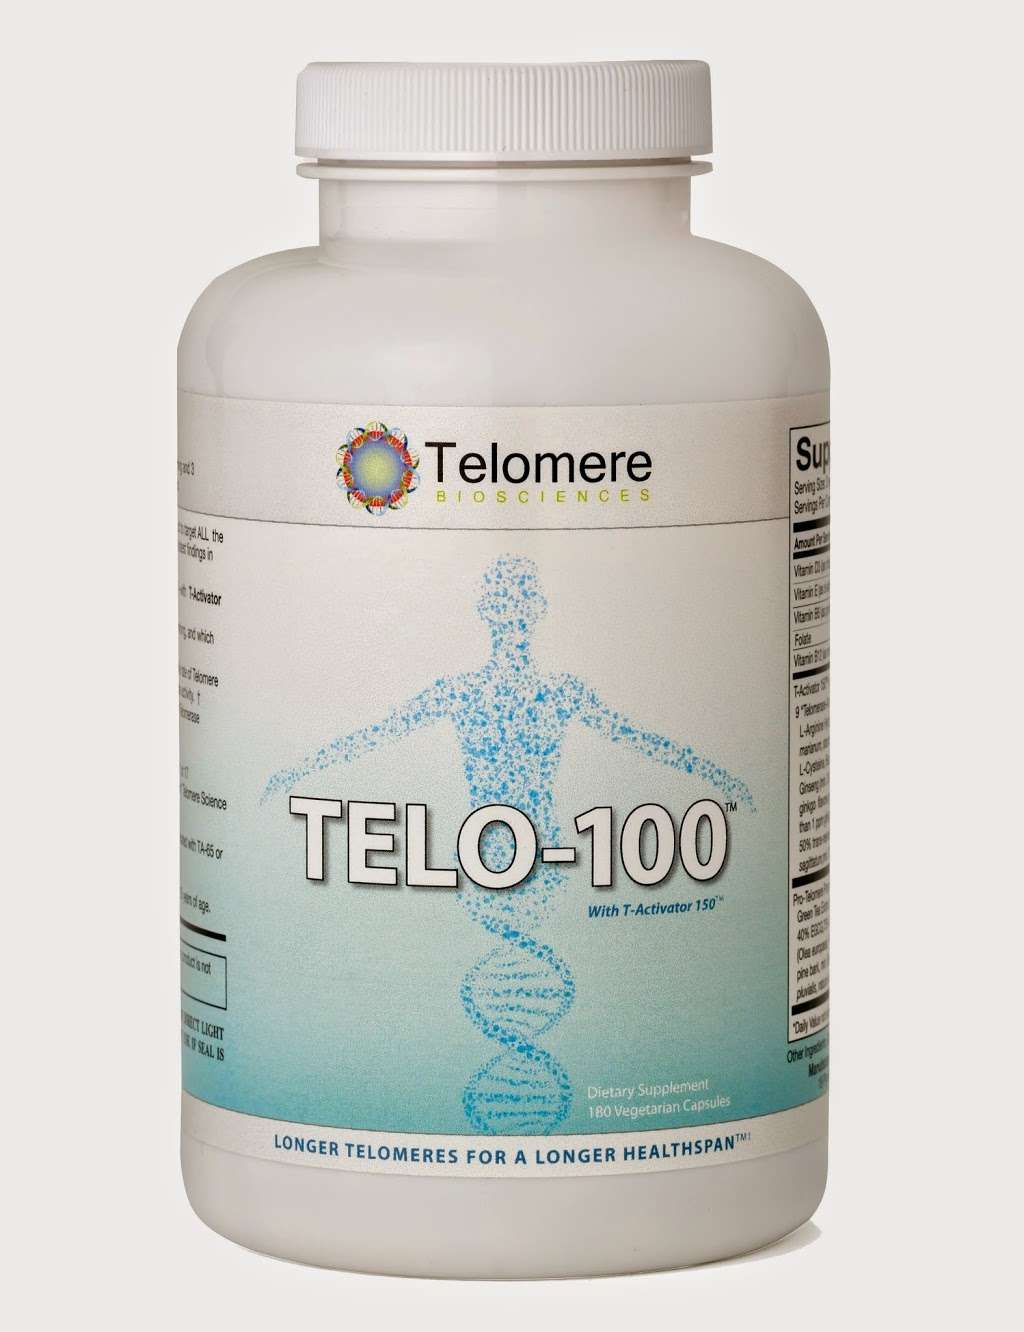 Telomere Biosciences LLC | 10 North St, Cold Spring, NY 10516